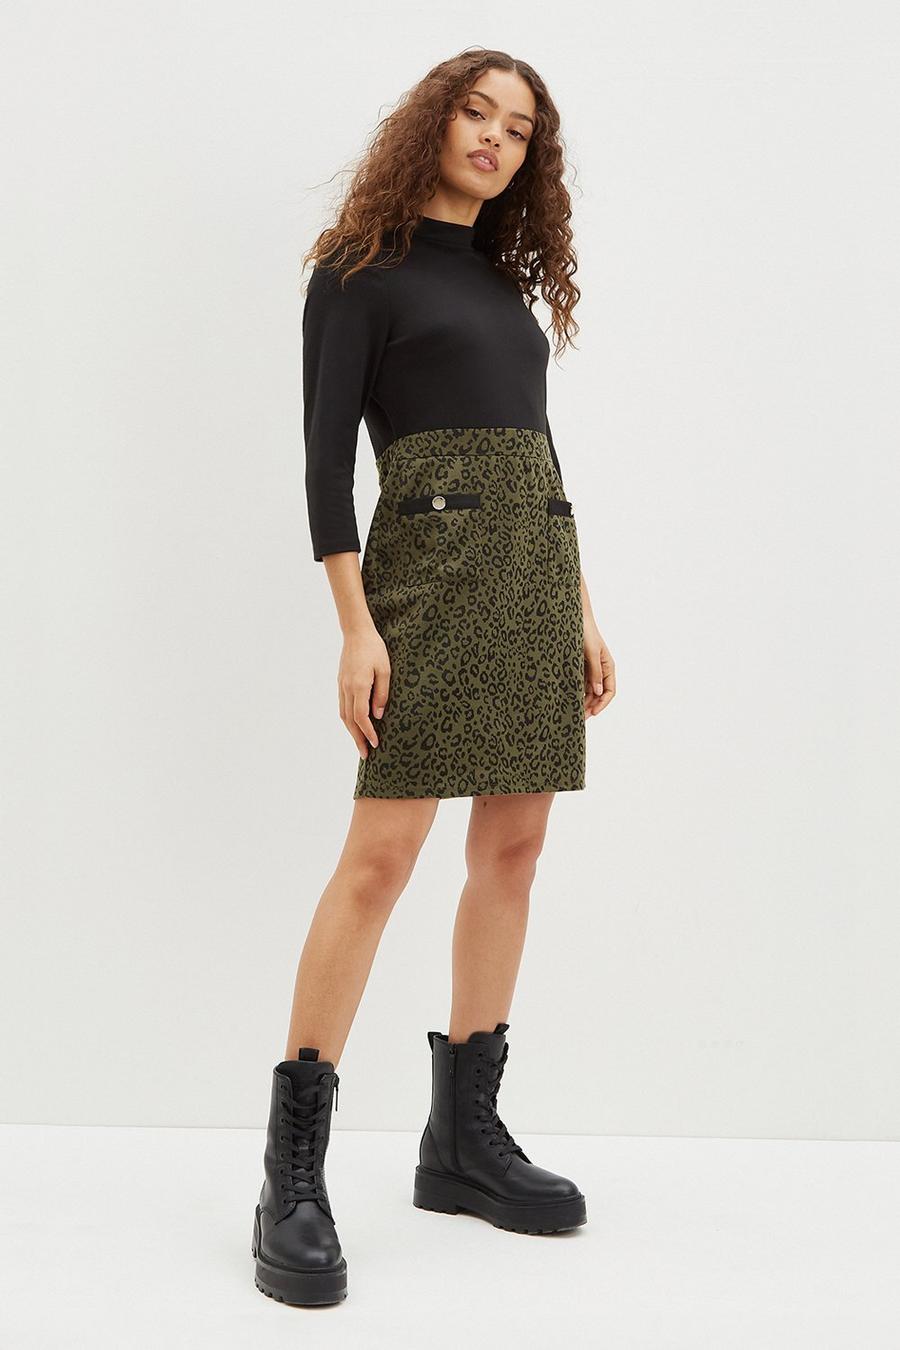 Petite Khaki Leopard Skirt Dress